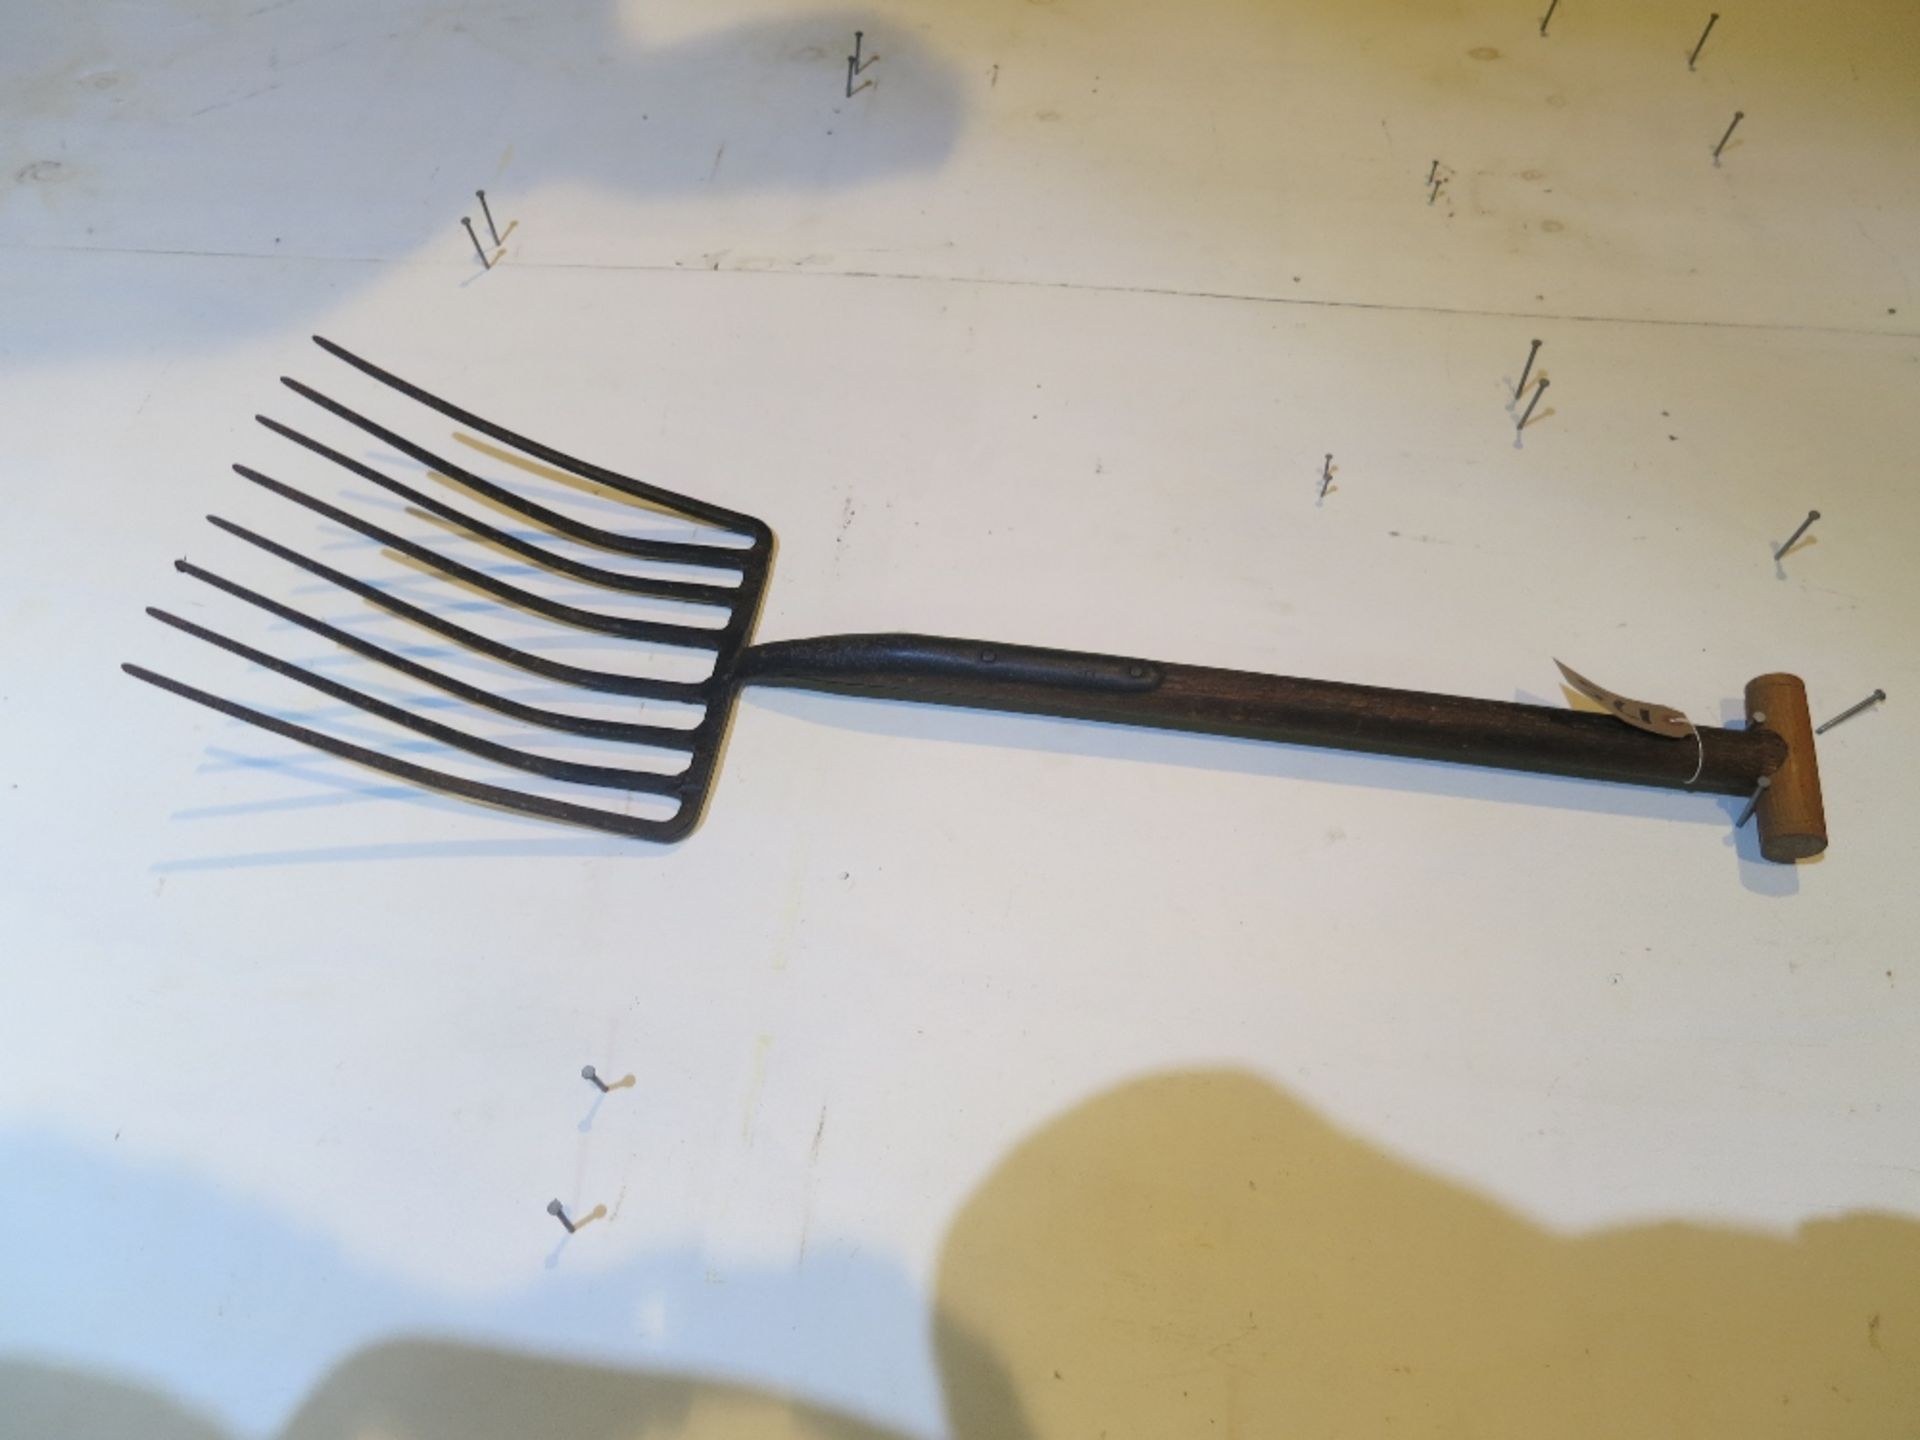 Dung fork